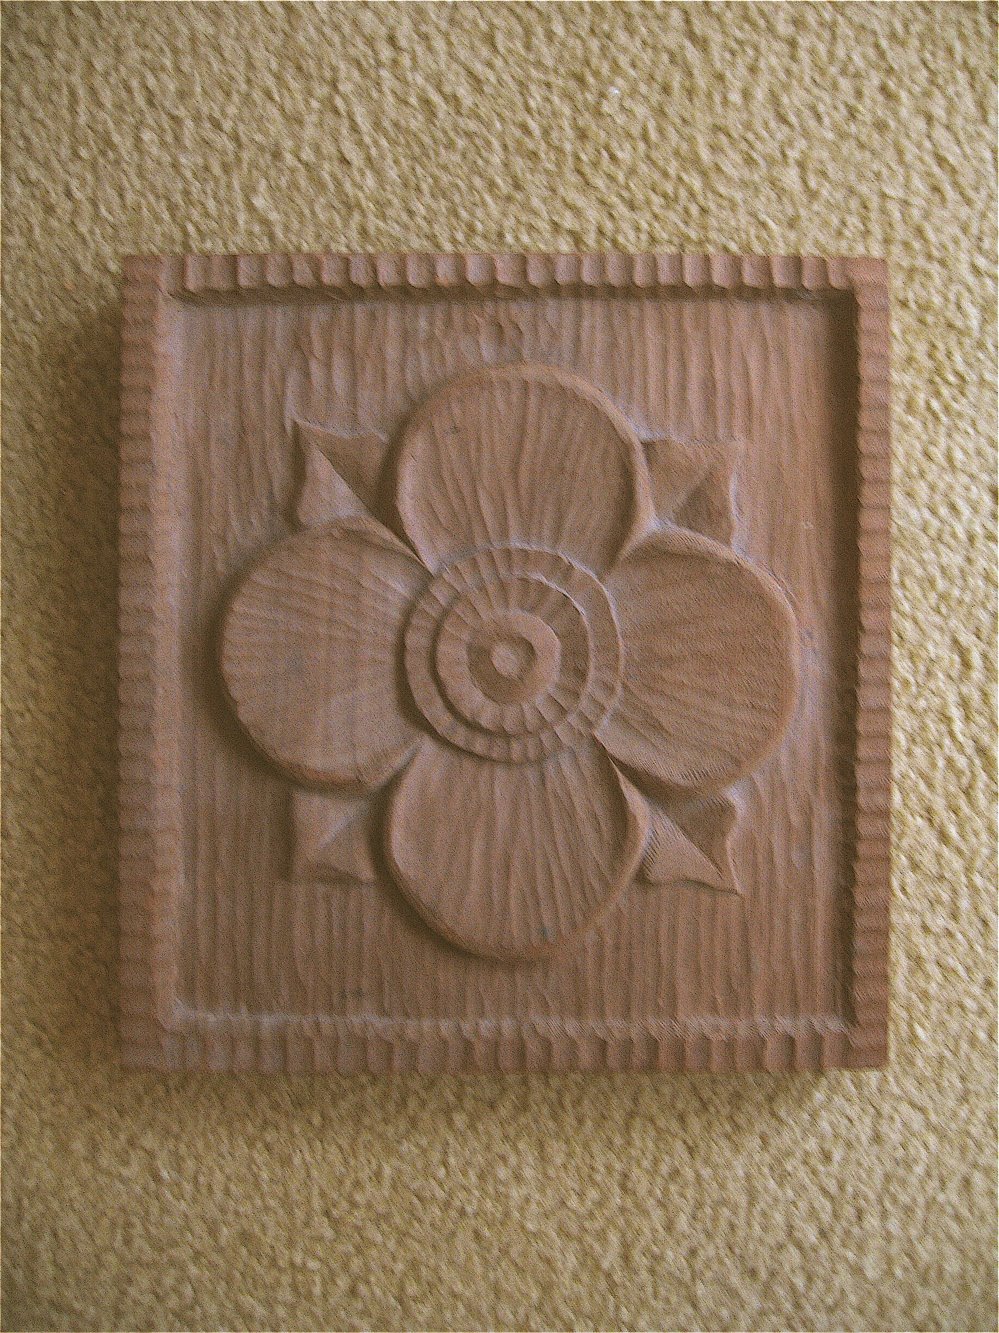 [flower+carved+in+redwood.jpg]